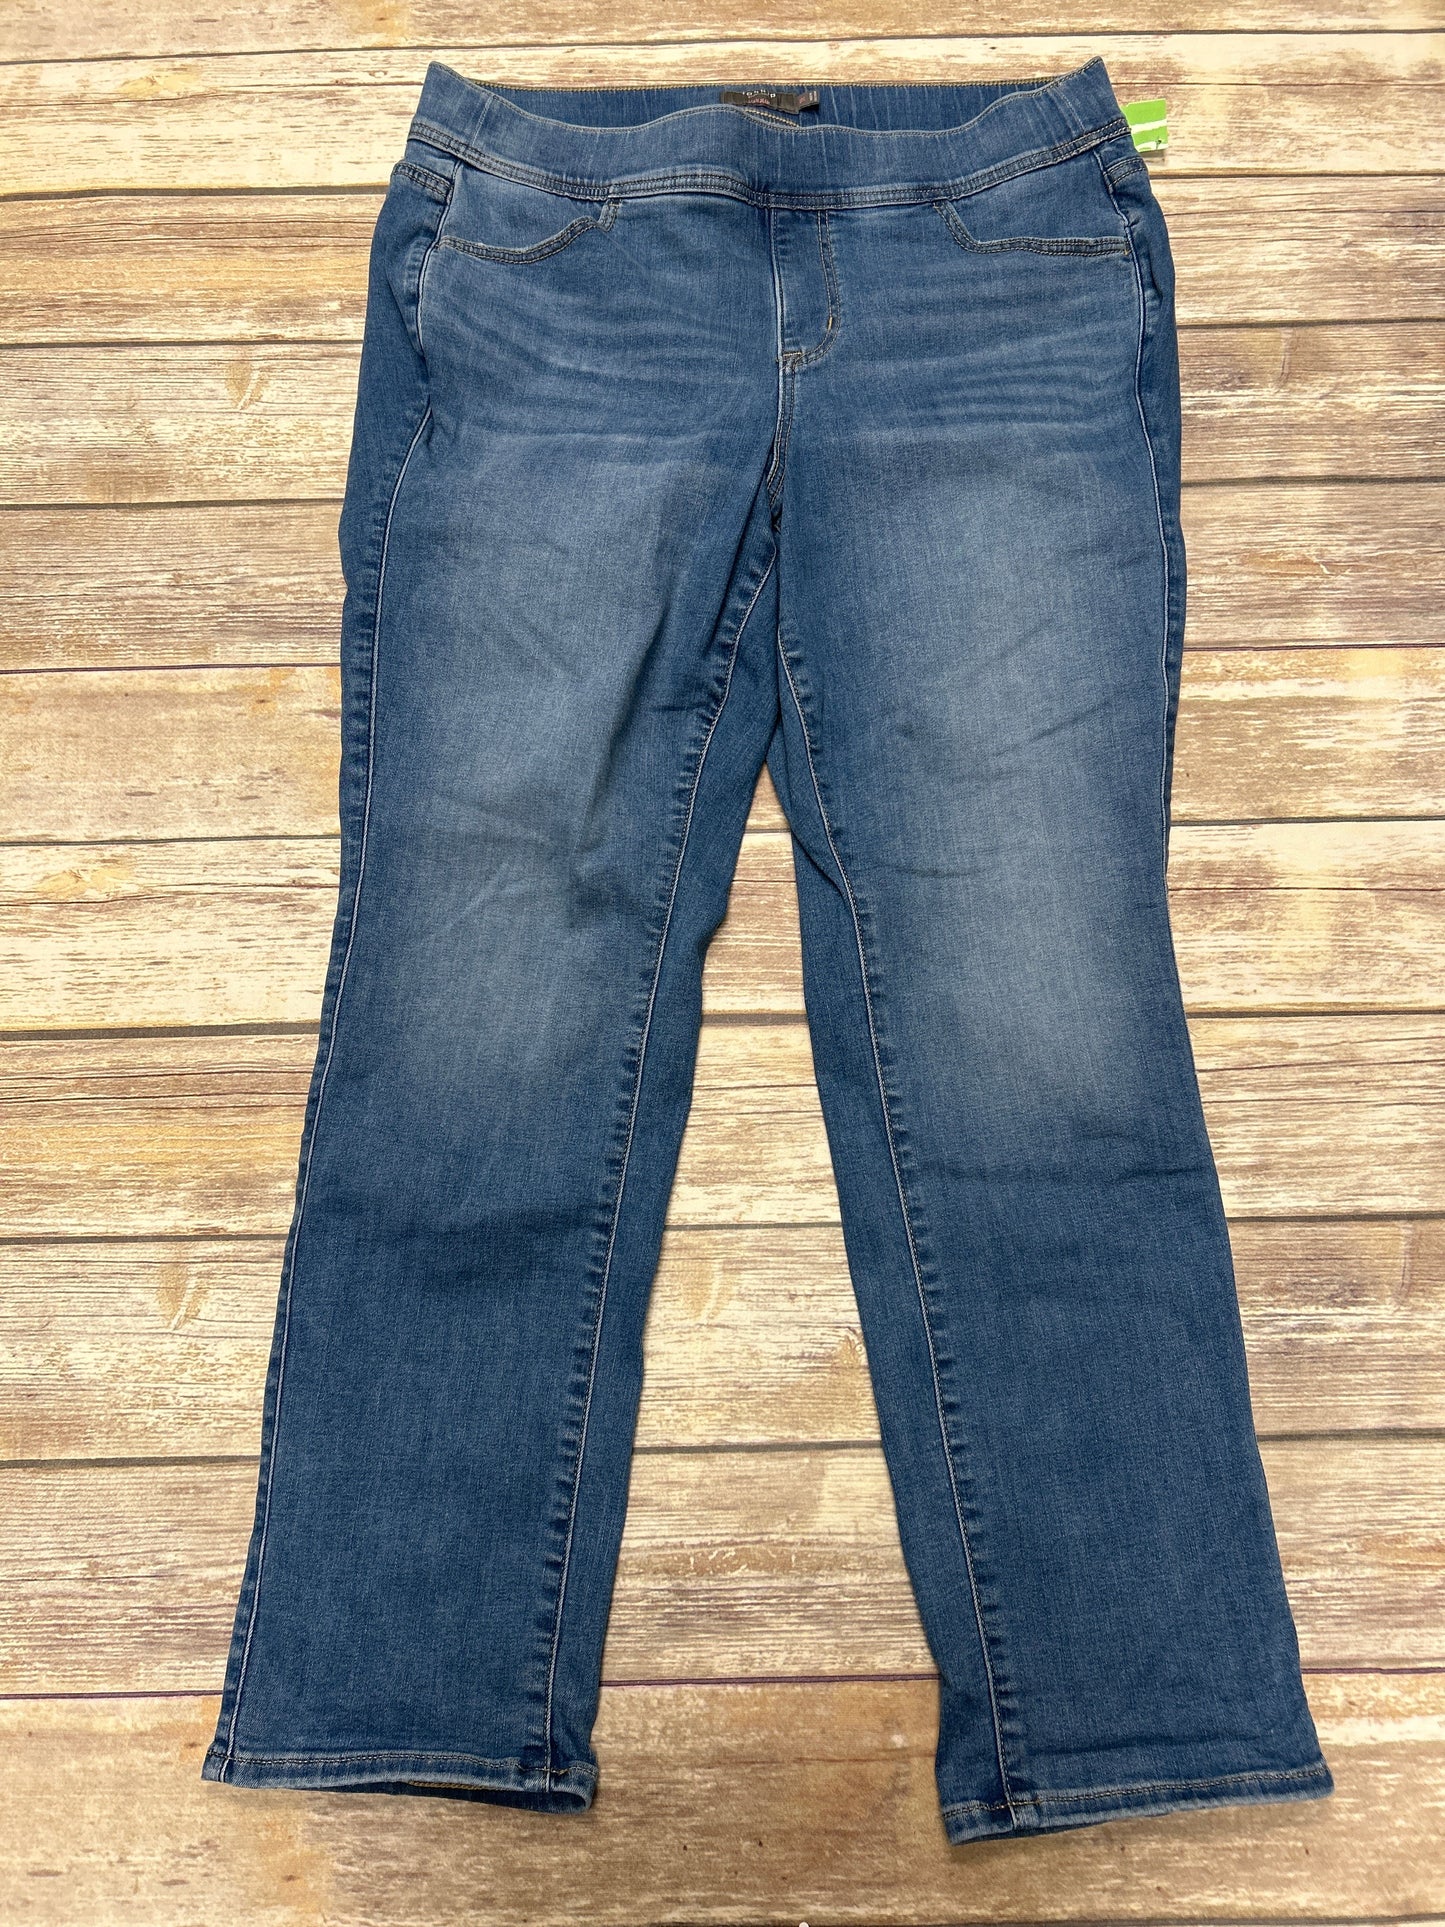 Blue Denim Jeans Skinny Torrid, Size 1x